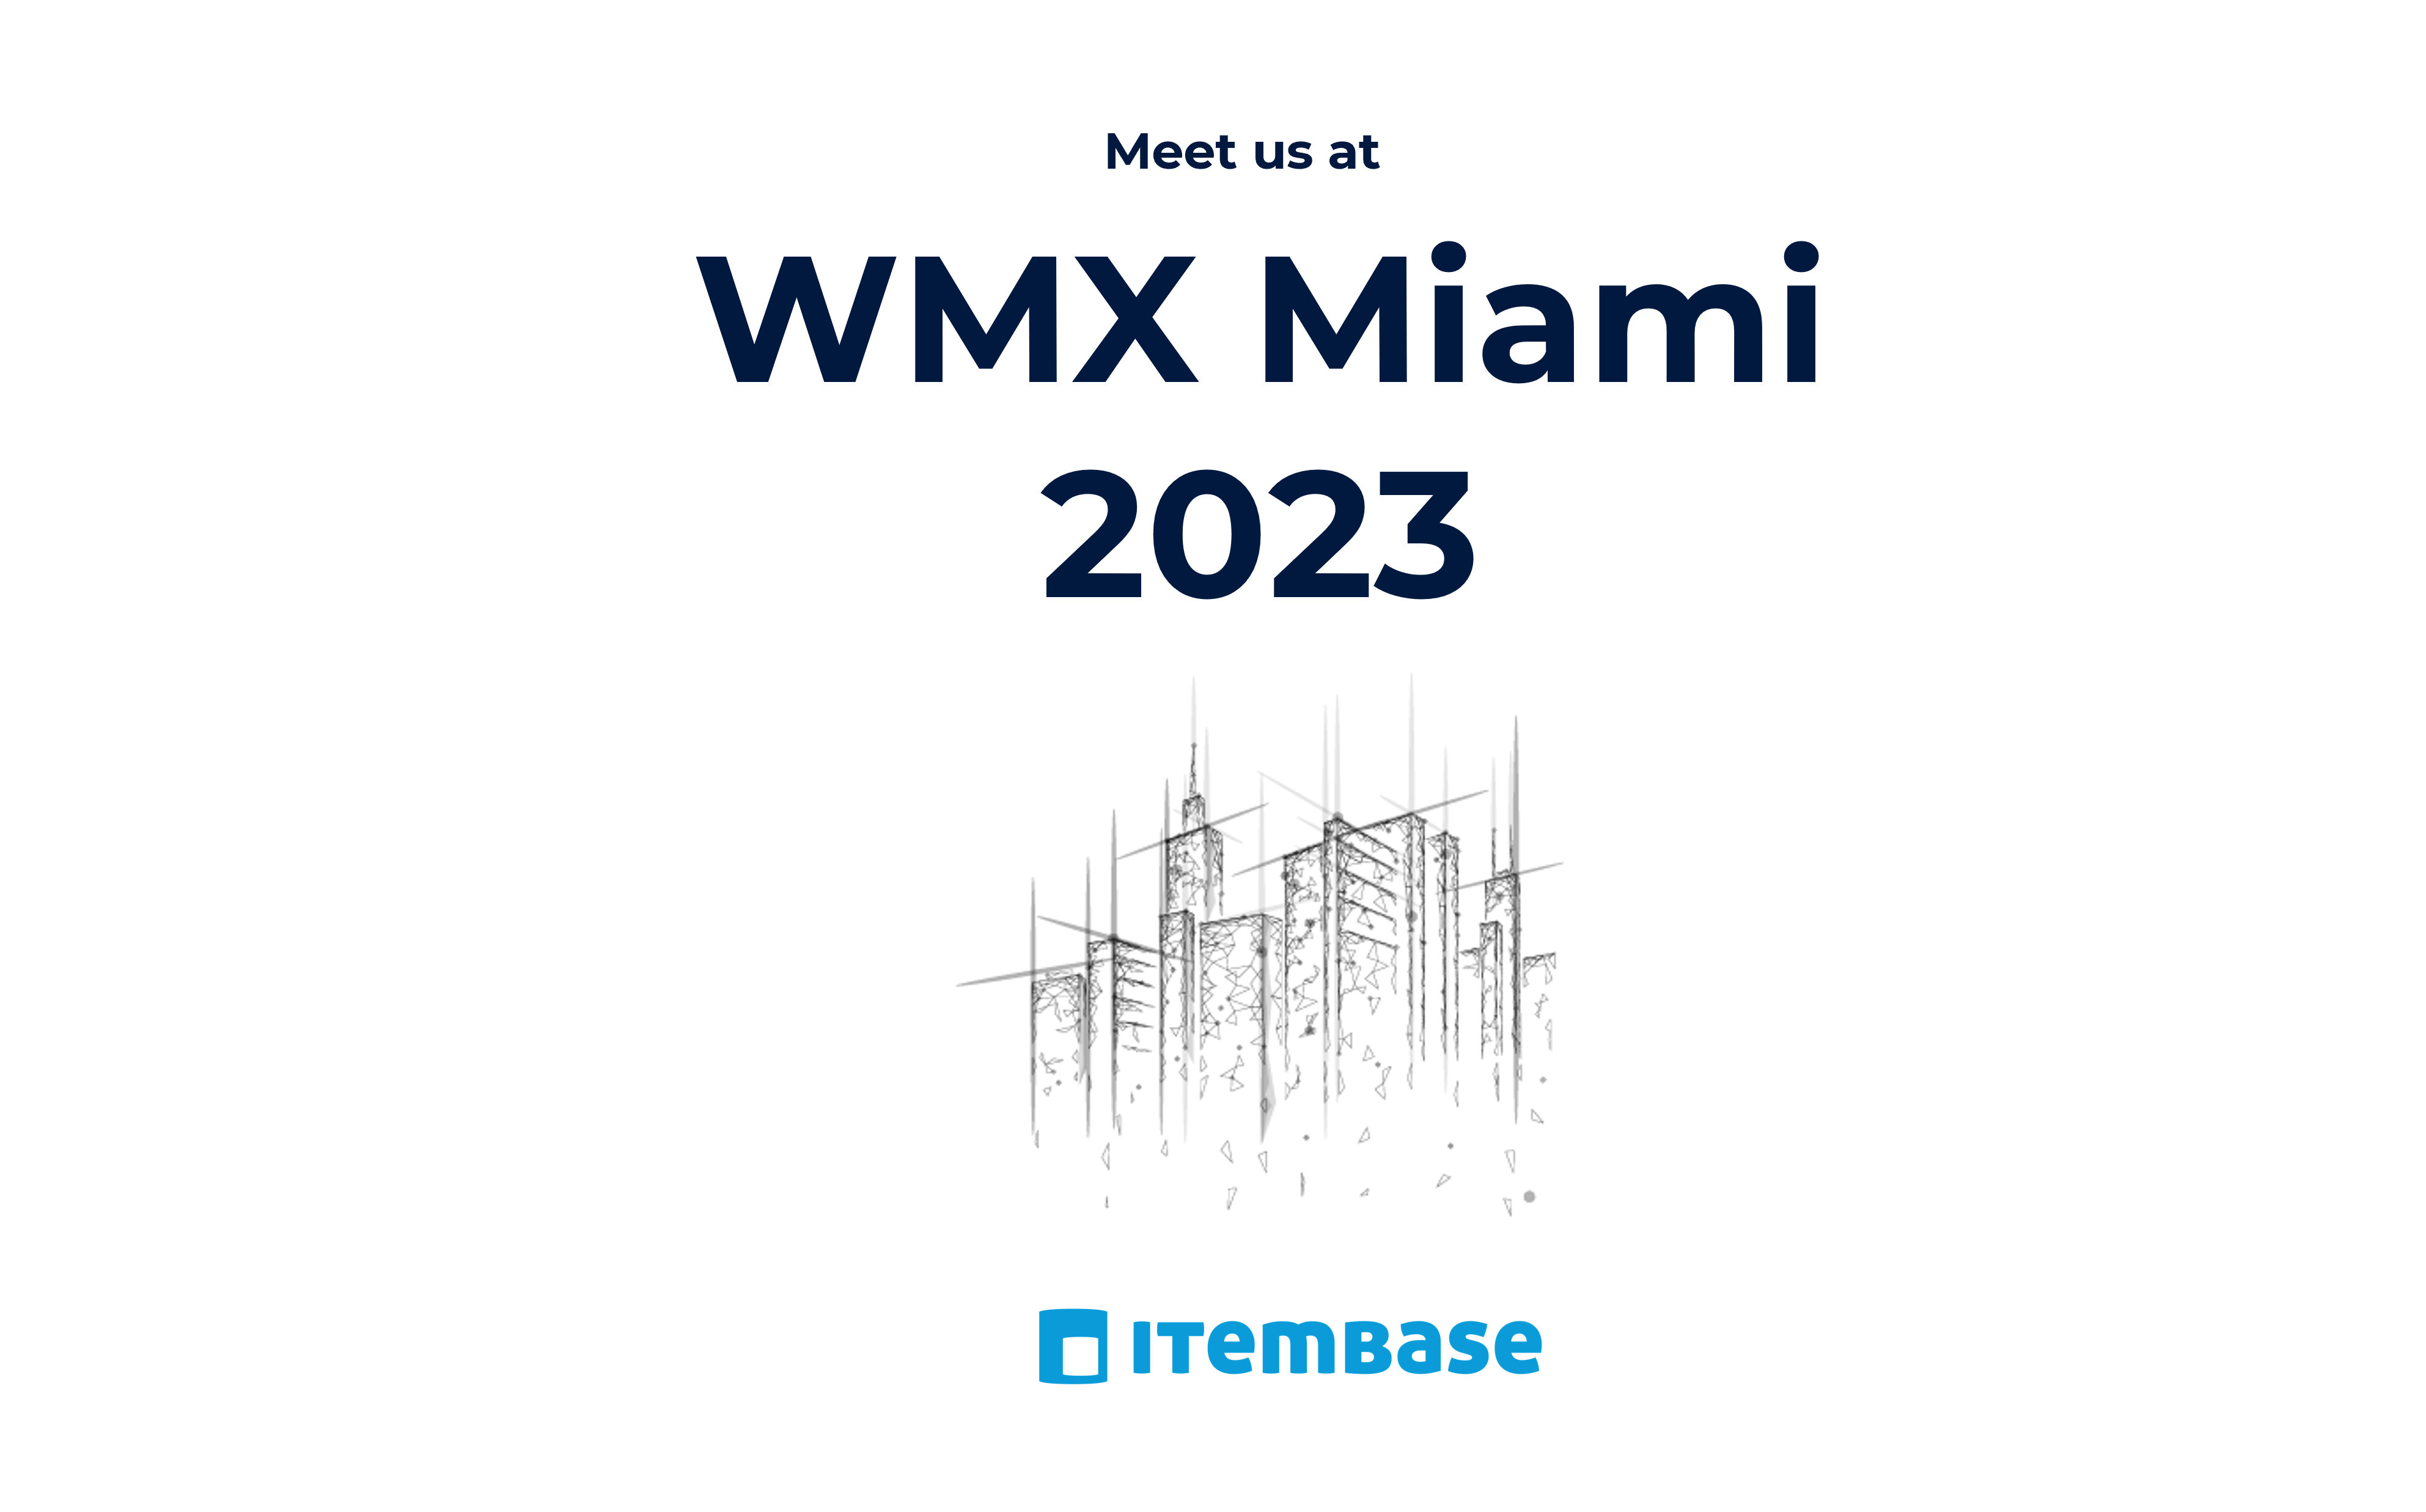 Meet Itembase at WMX Miami 2023